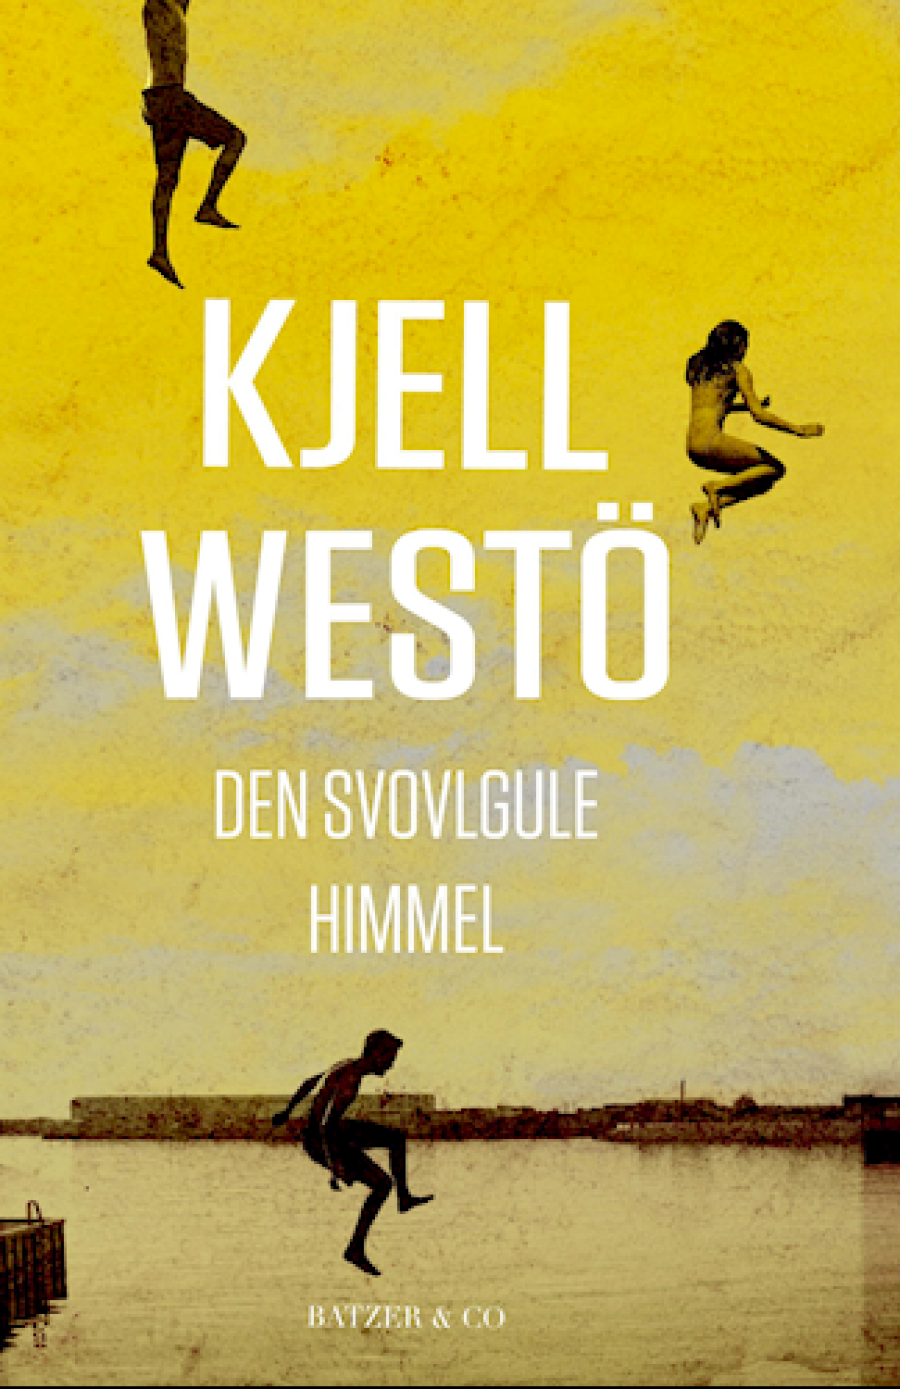 Forside til bogen Den svovlgule himmel af Kjell Westö